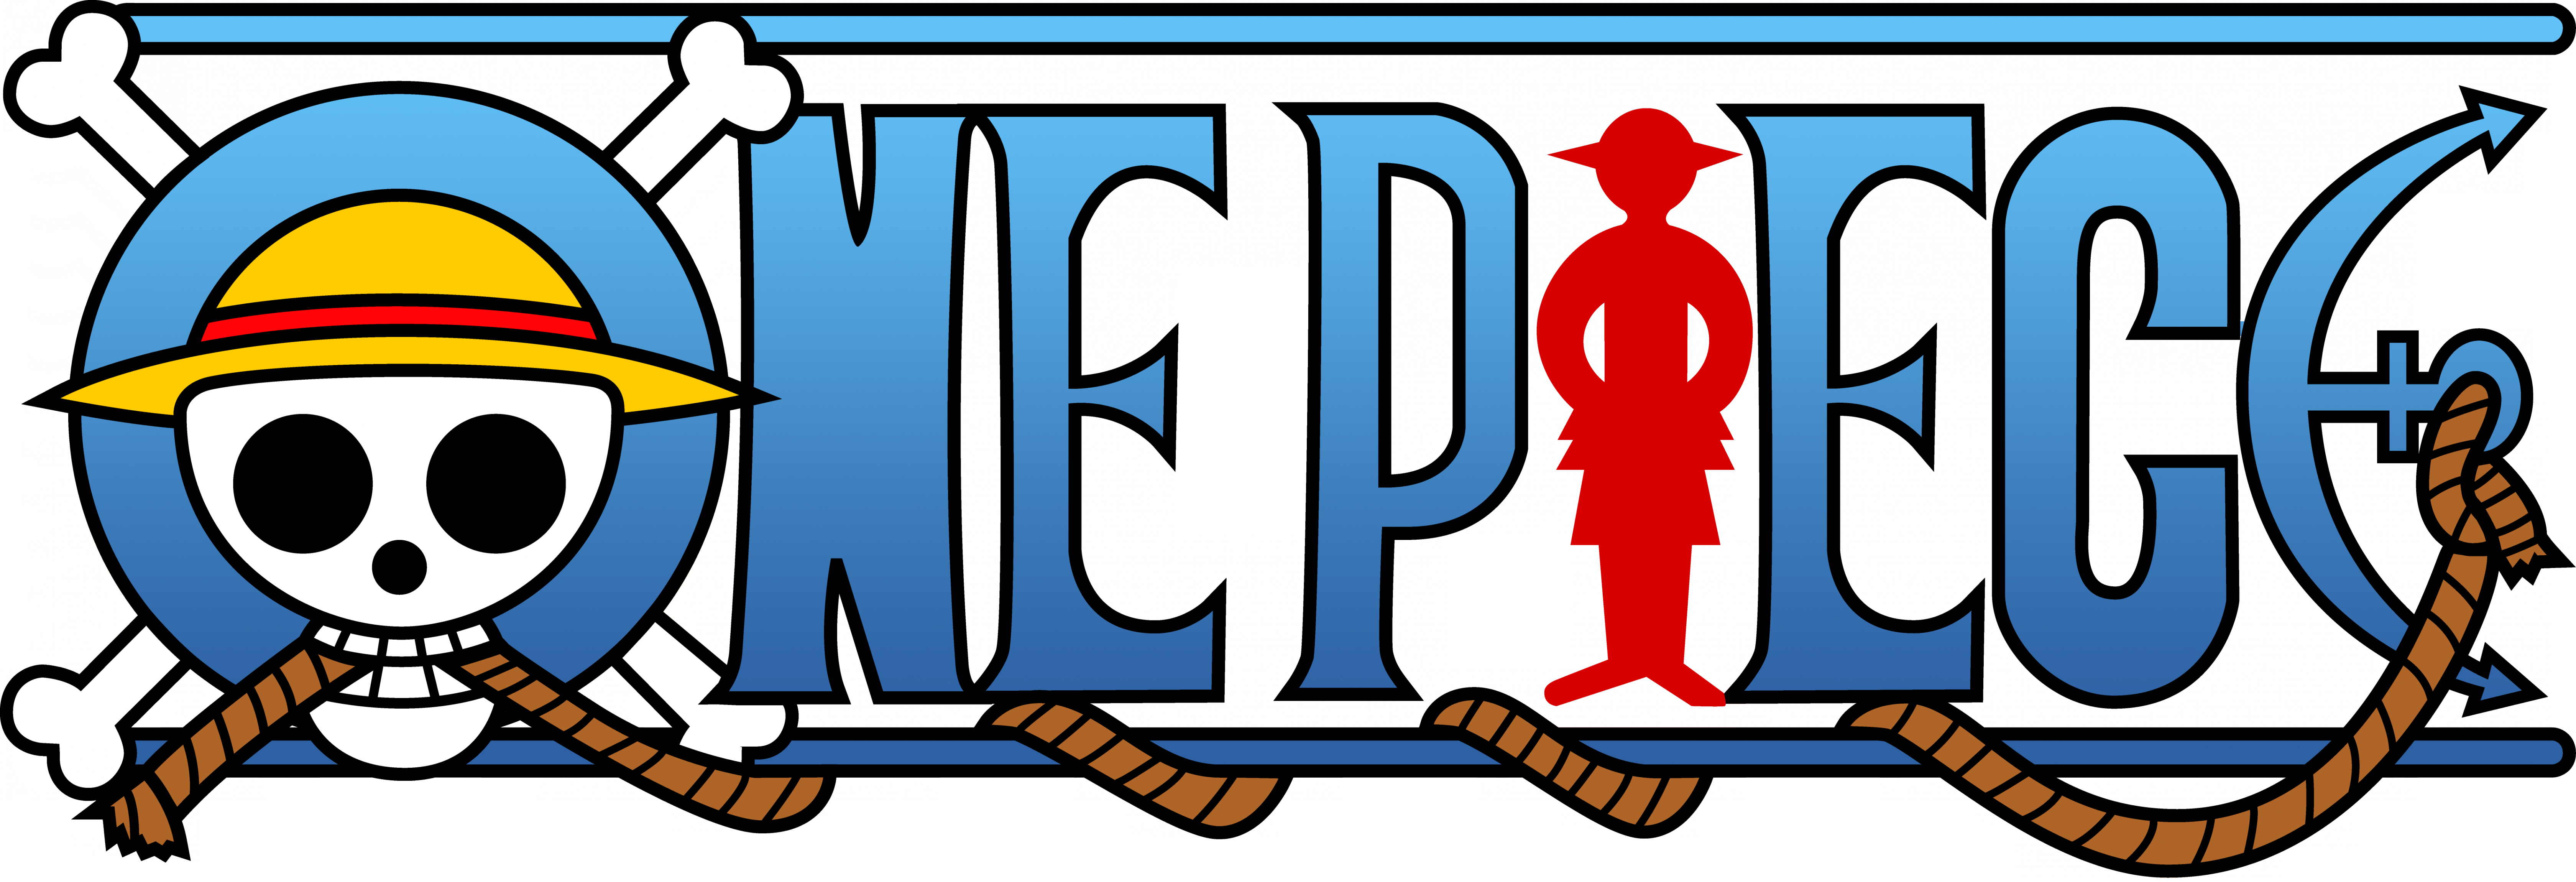 One Piece Logo Clipart Best